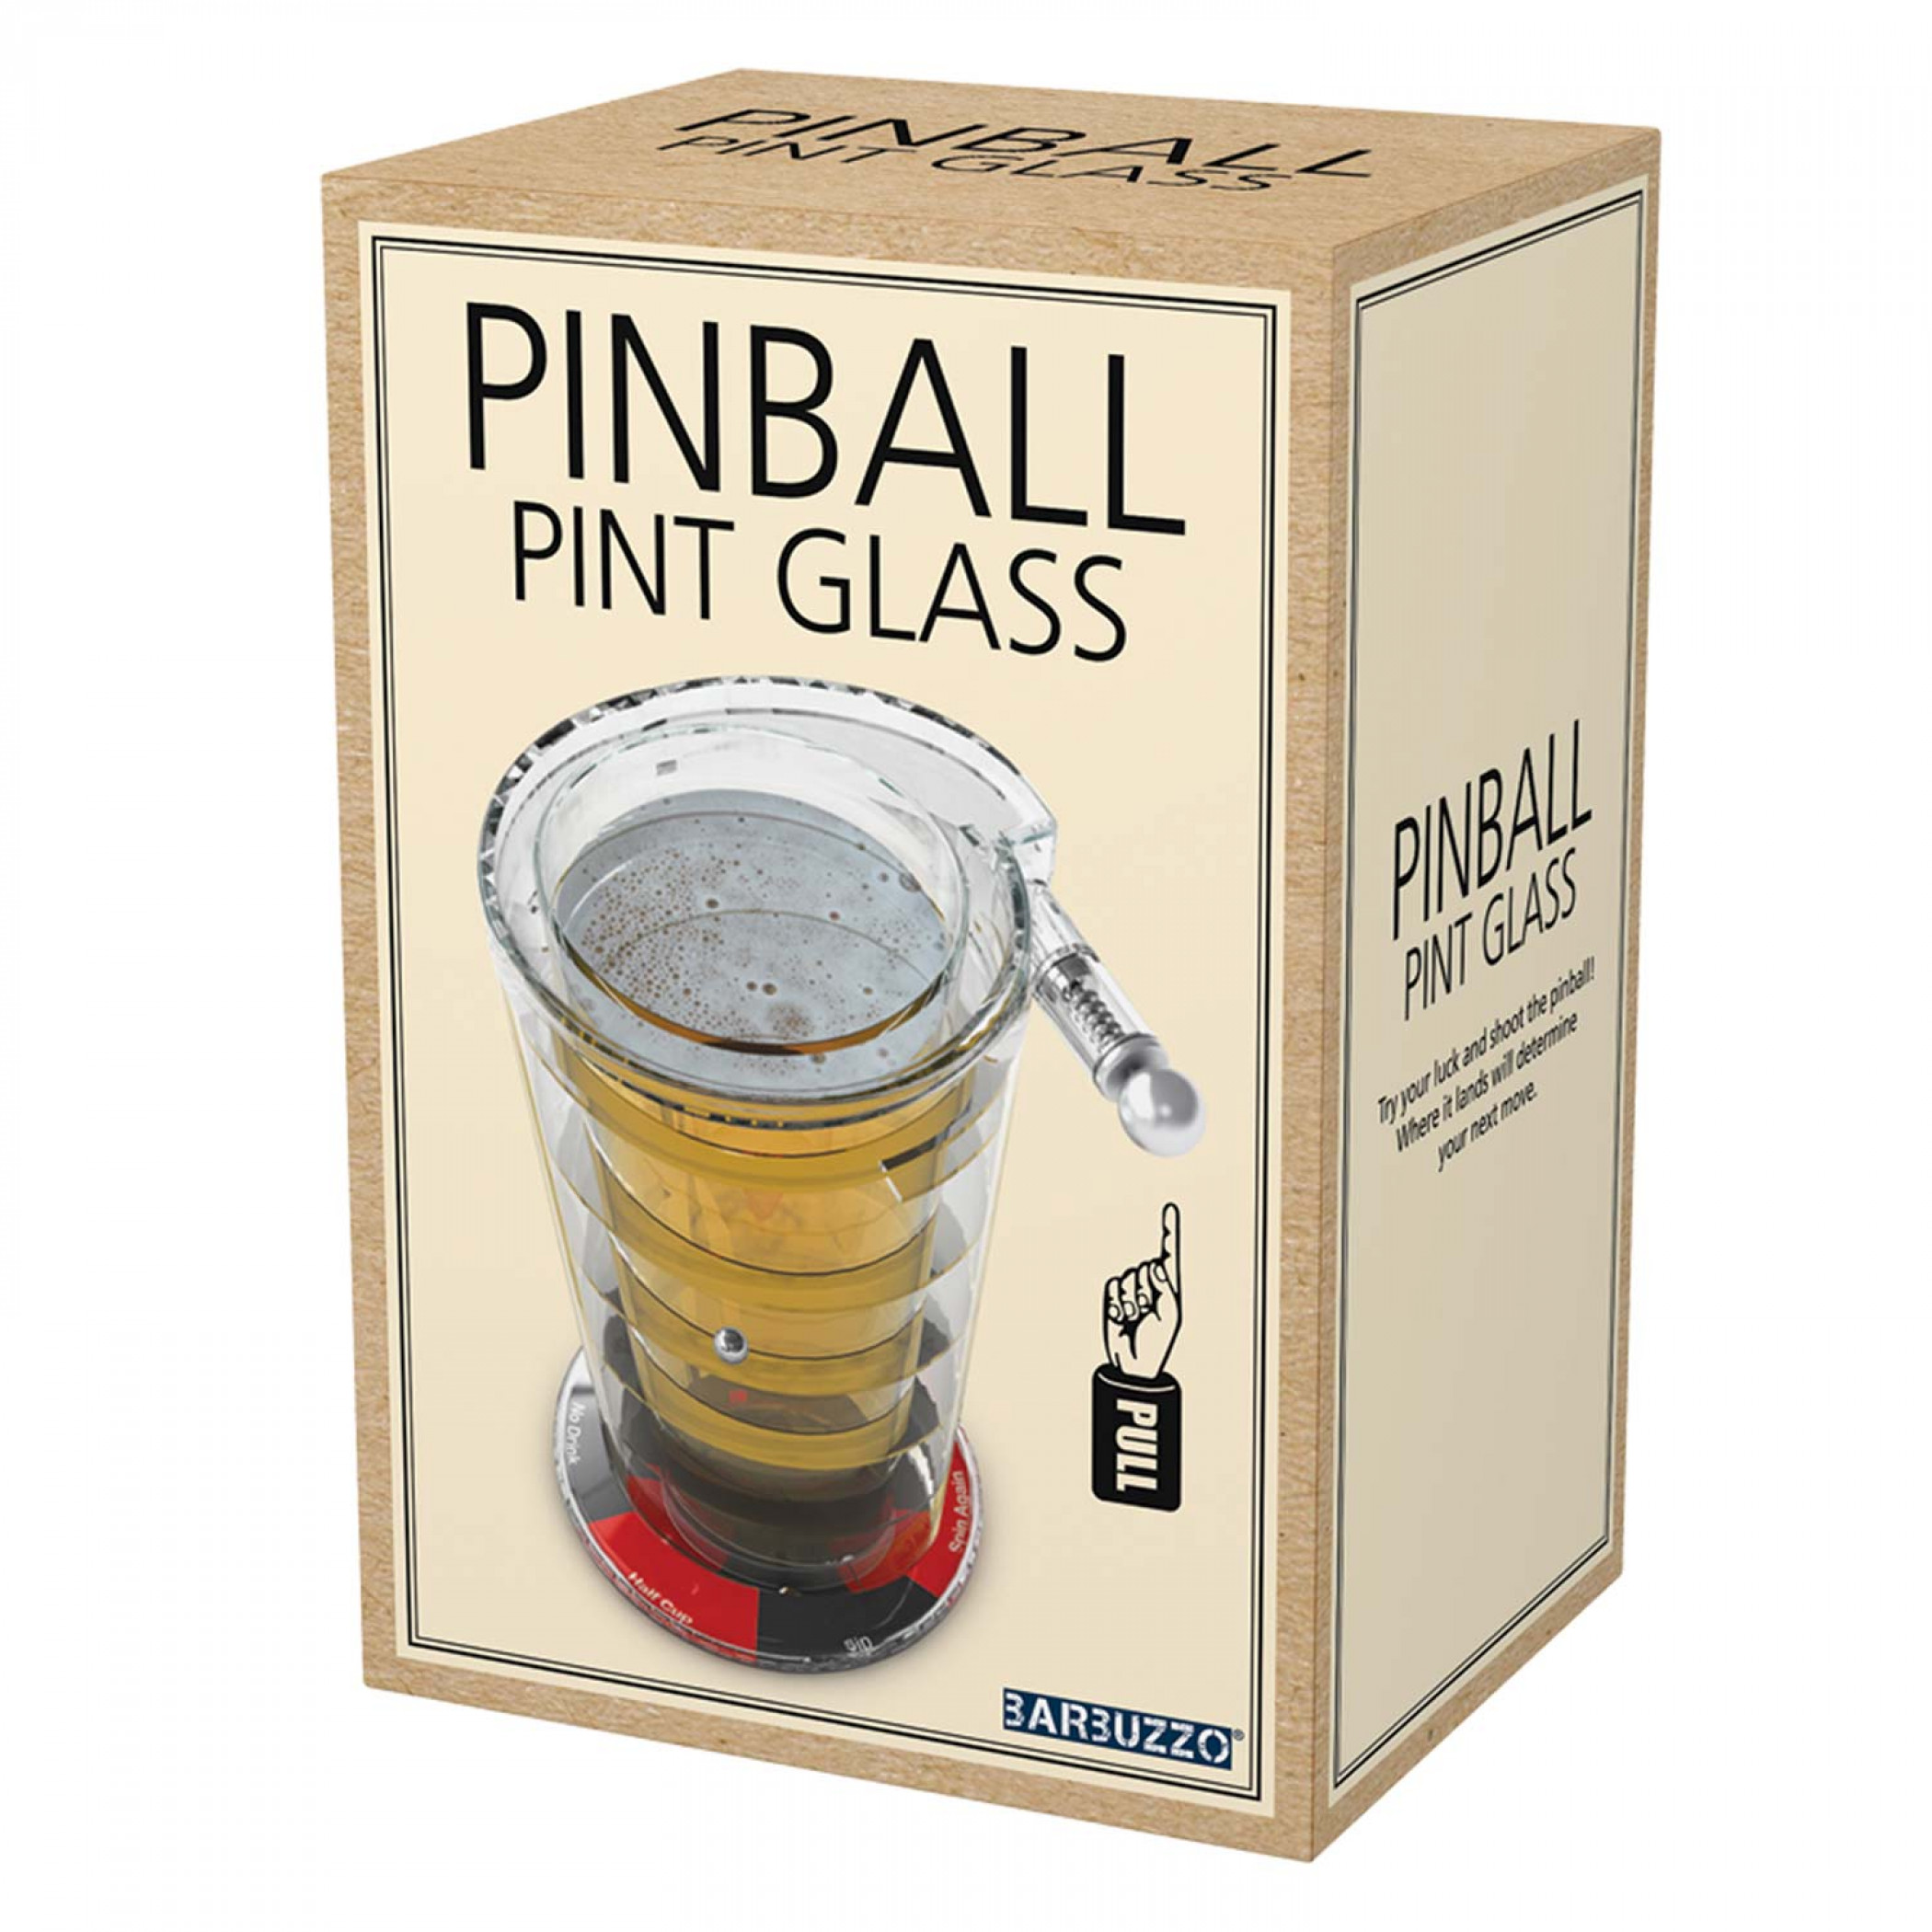 Pinball Pint Glass